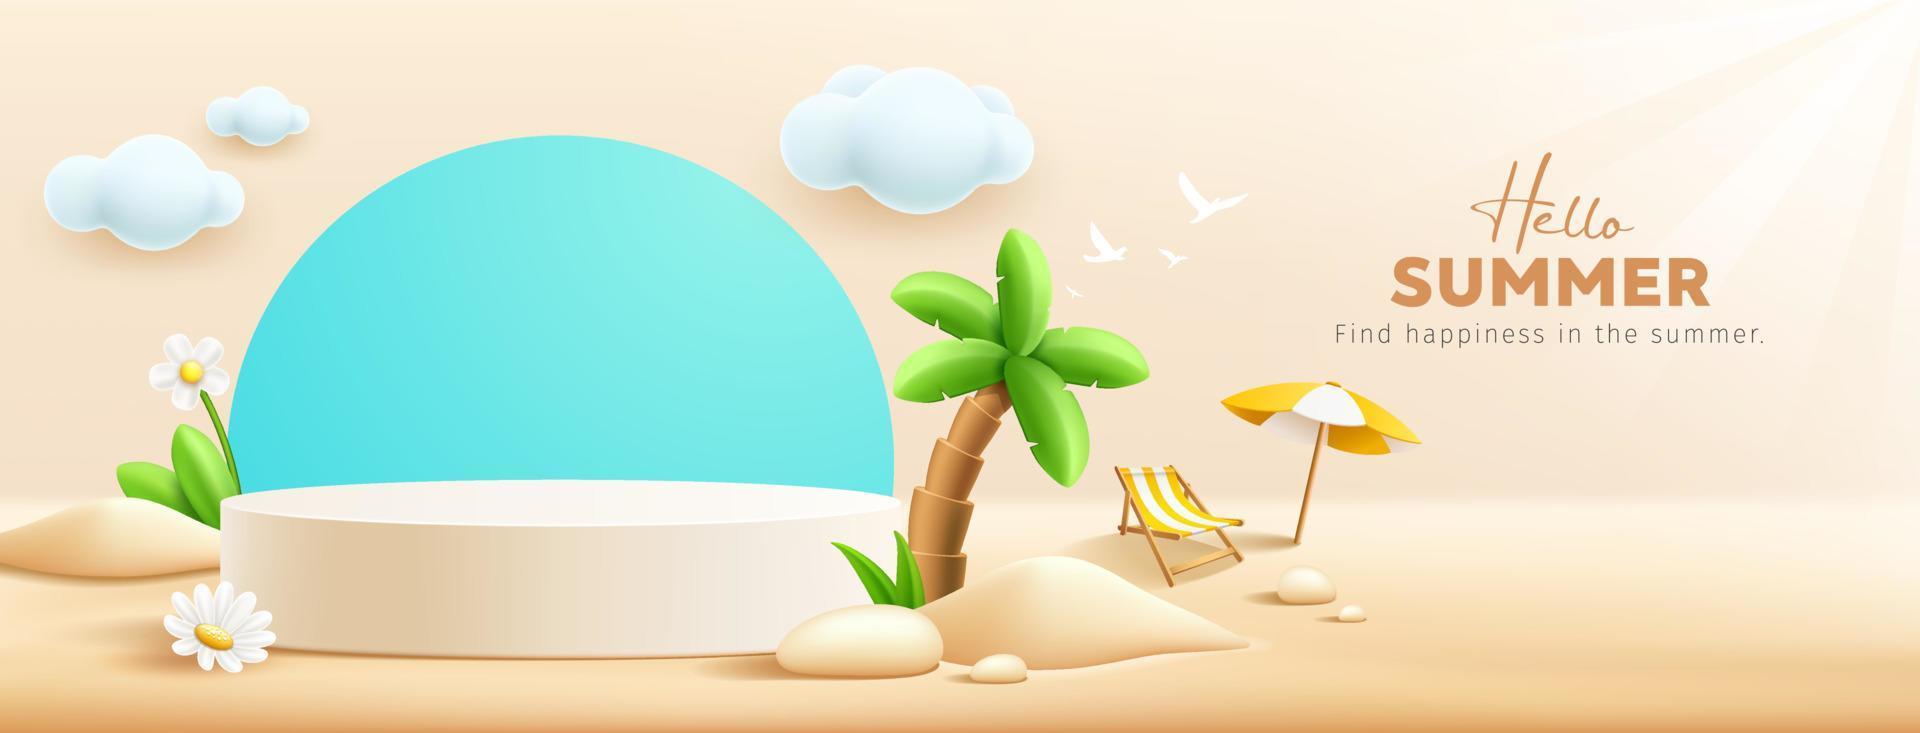 sommar podium visa, lugg av sand, blommor, kokos träd, strand paraply, strand stol, baner design, på moln och sand strand bakgrund, eps 10 vektor illustration